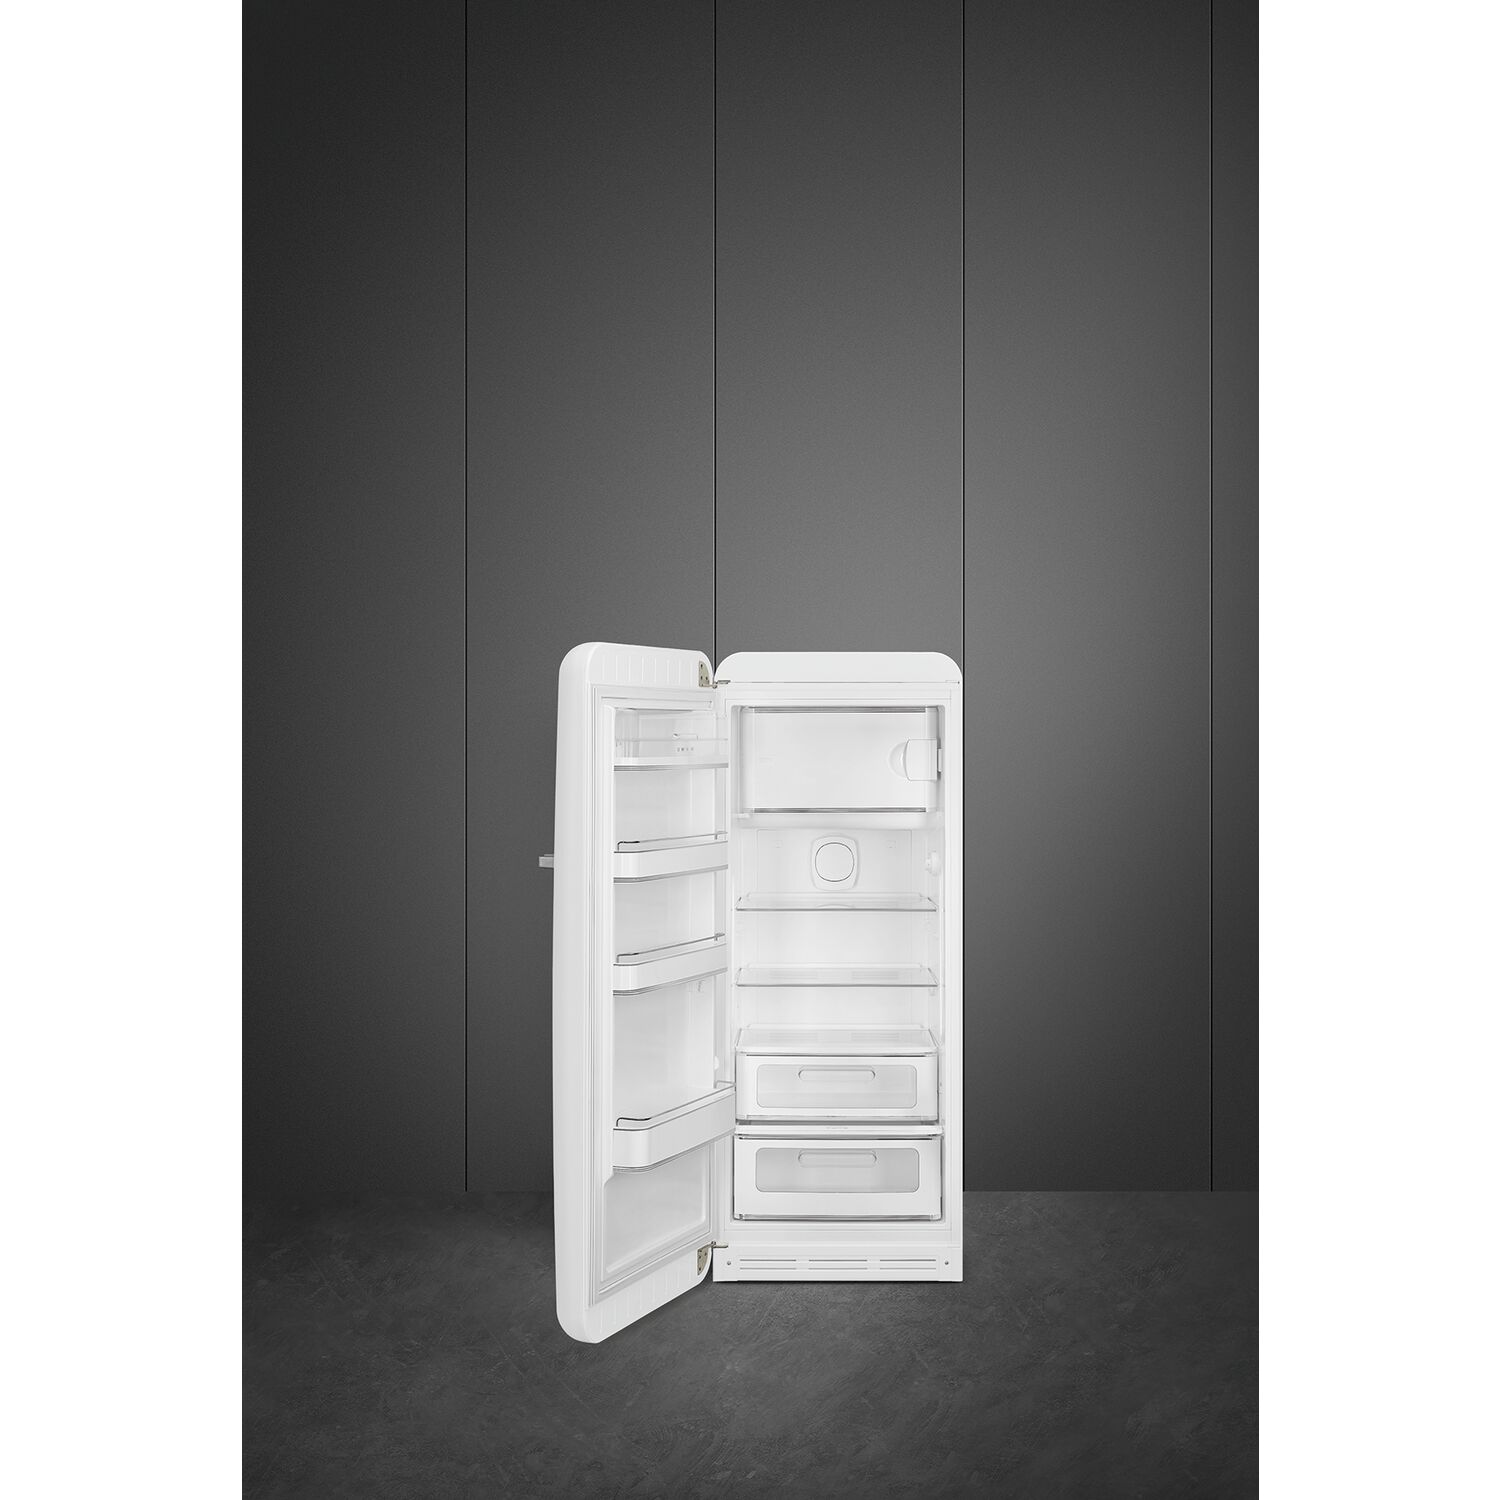 FAB28LWH5 SMEG Retro Stand-Kühlschrank Linksanschlag Weiß